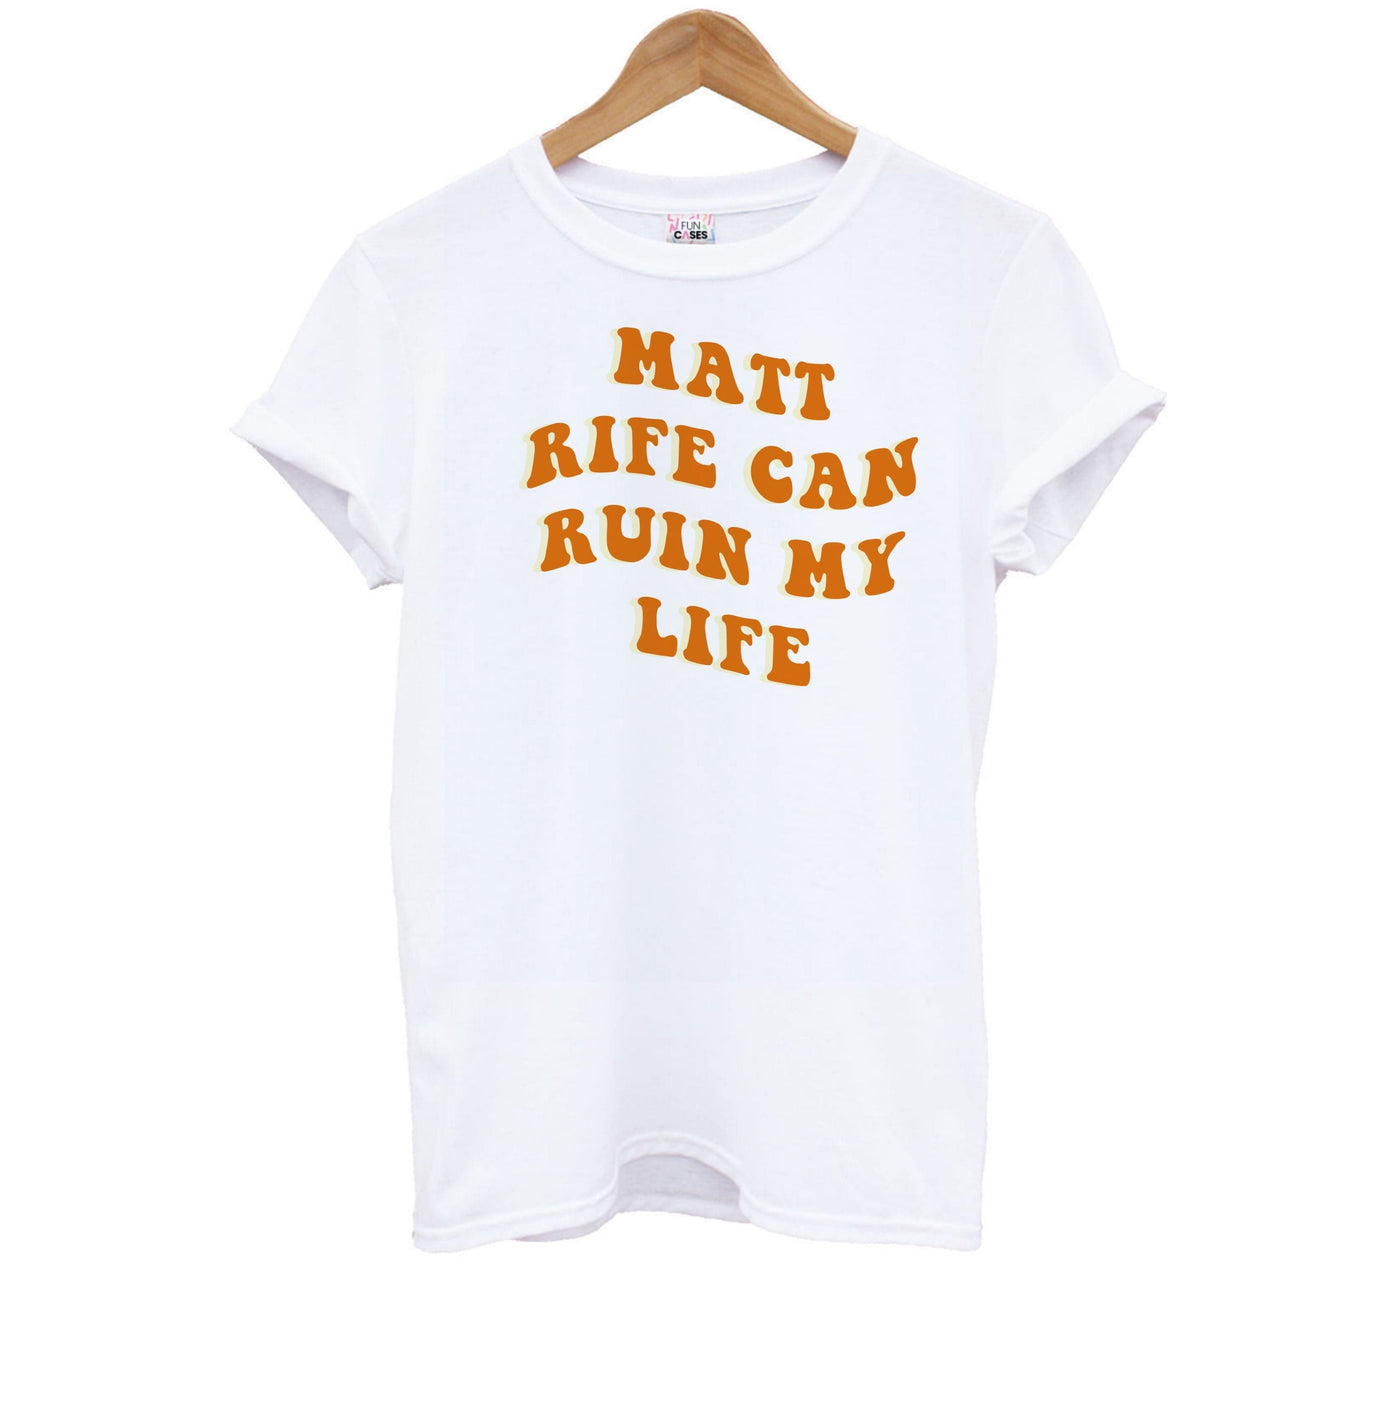 Matt Rife Can Ruin My Life - Matt Rife Kids T-Shirt